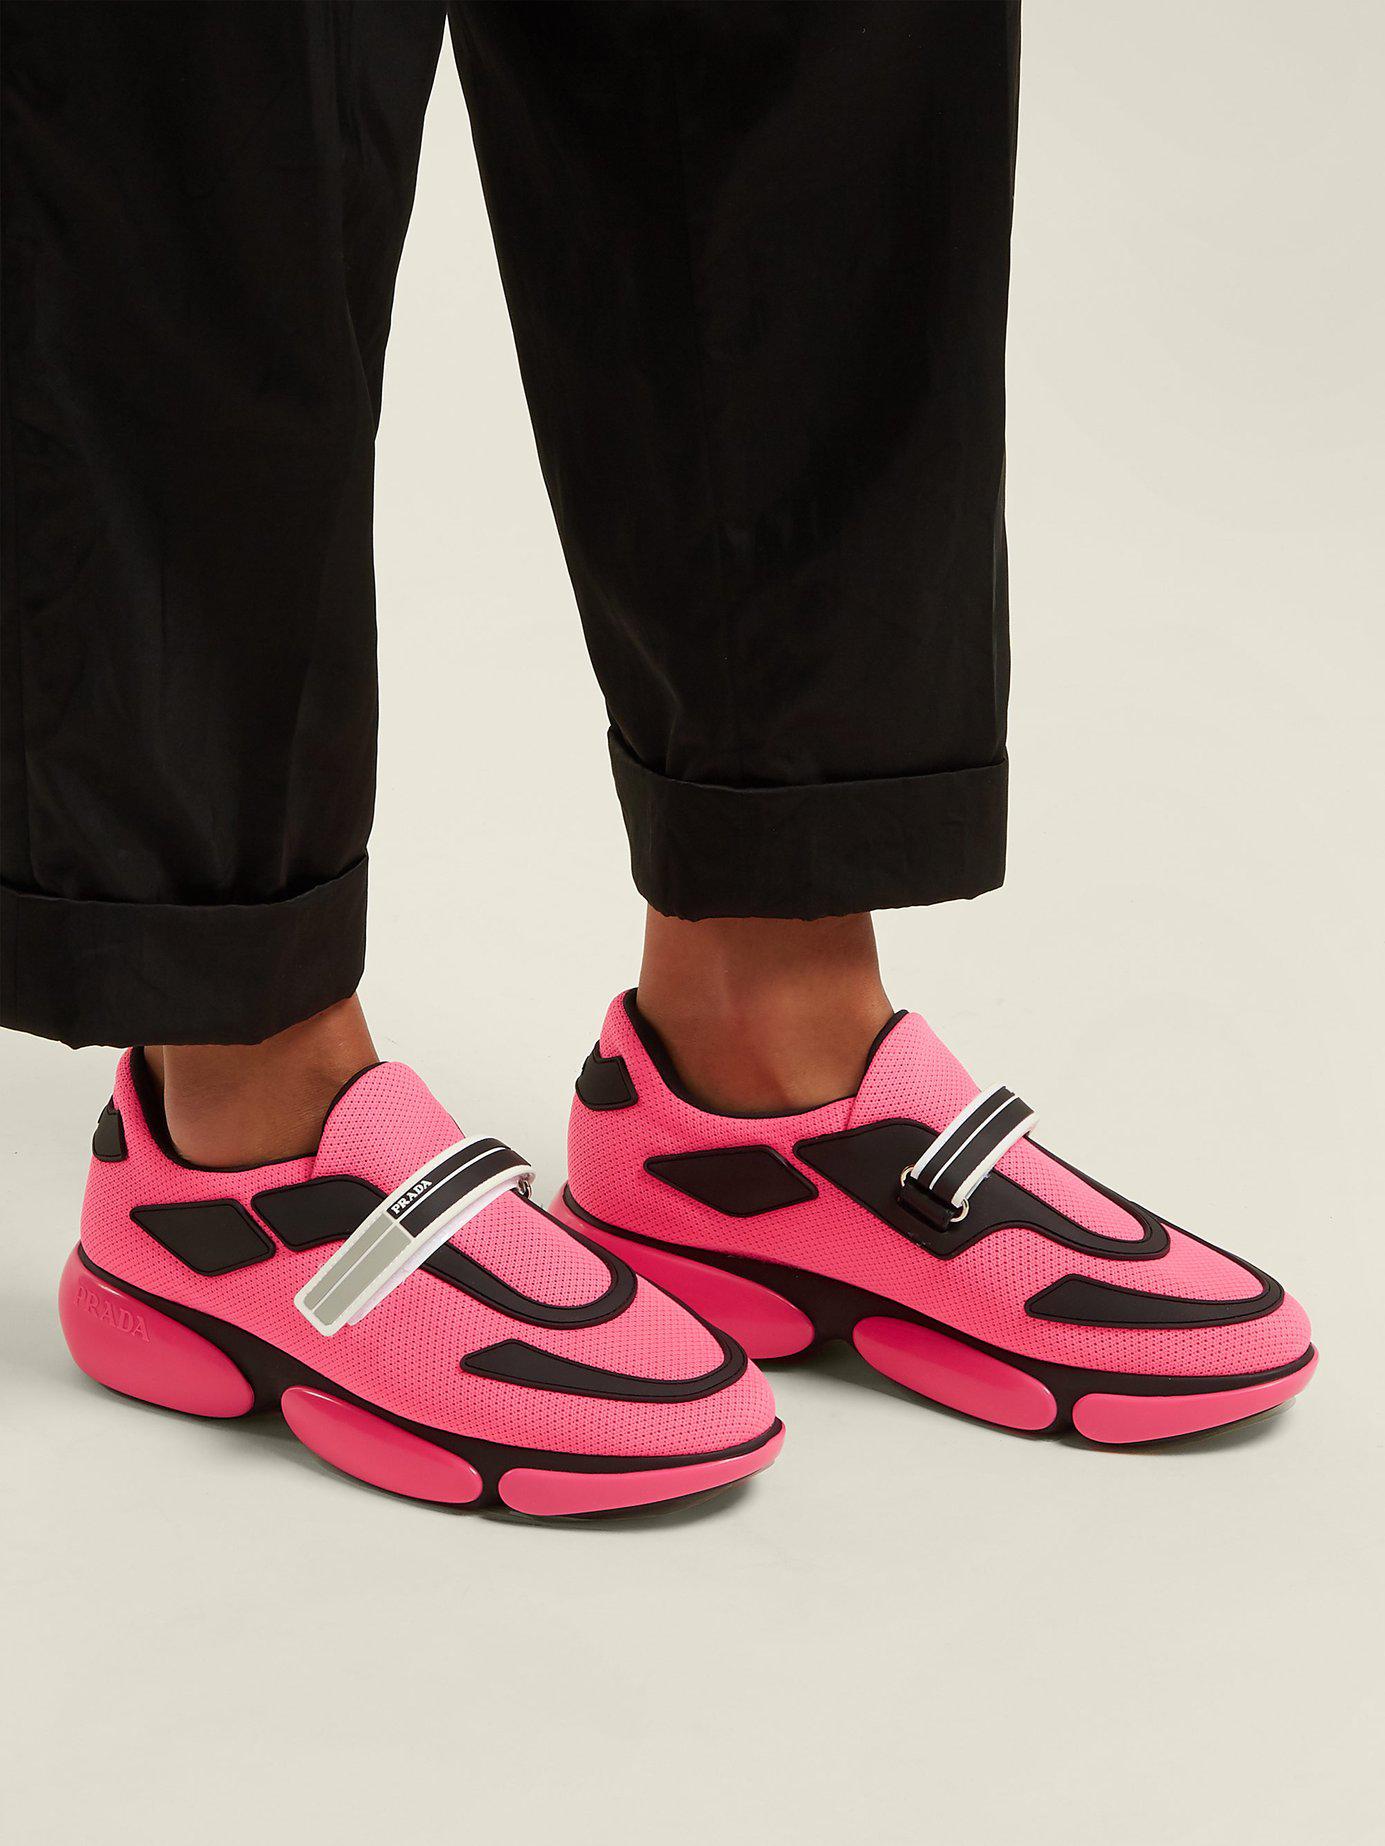 prada trainers pink, OFF 75%,www 